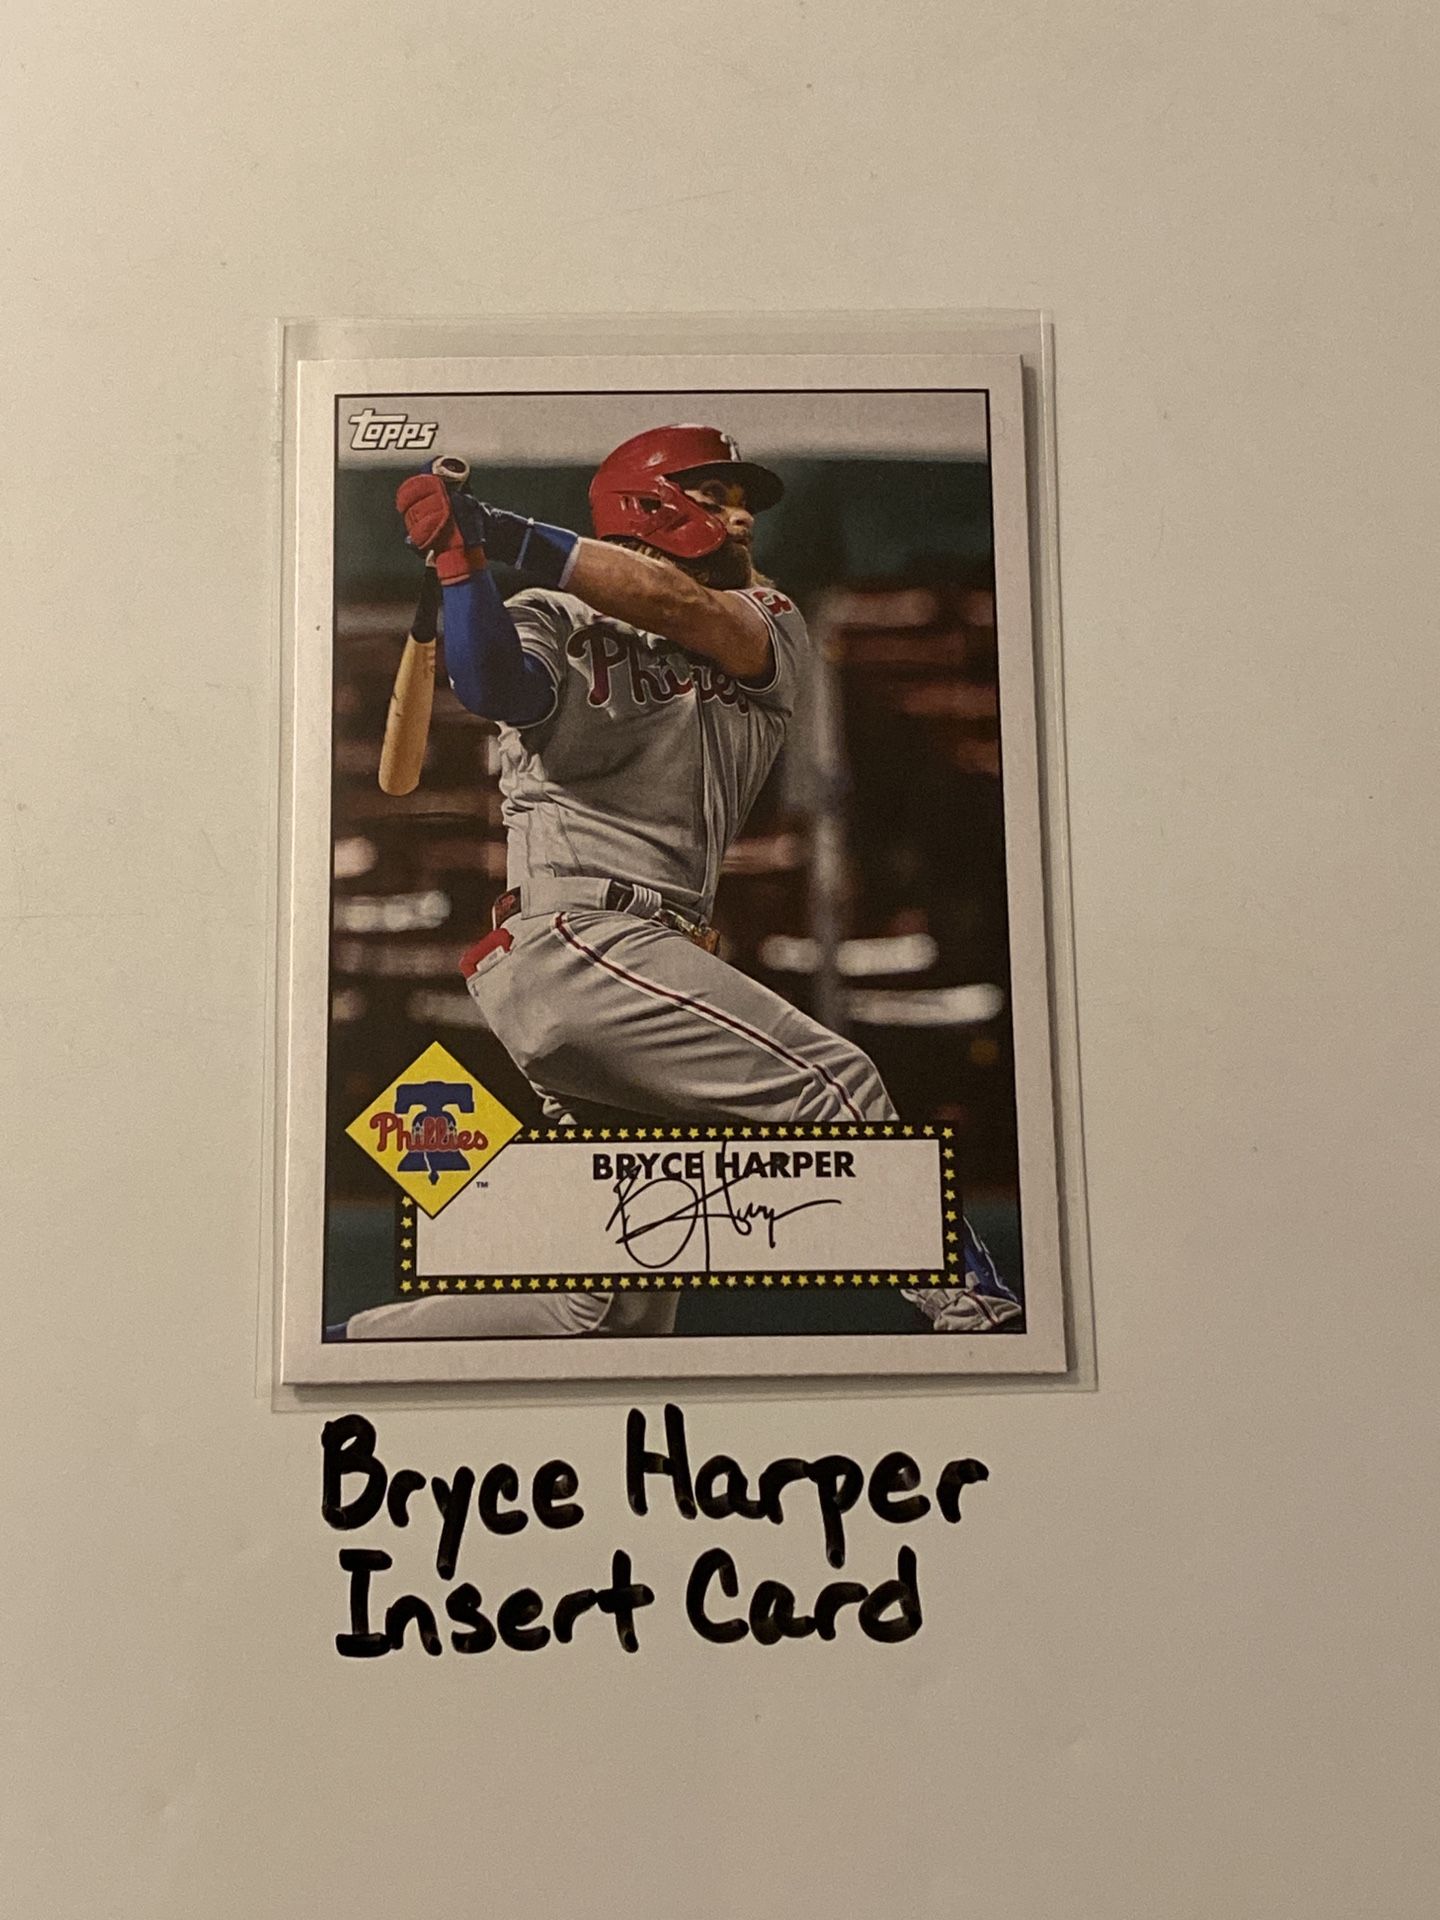 Bryce Harper Philadelphia Phillies Outfielder Short Print Insert Card. 